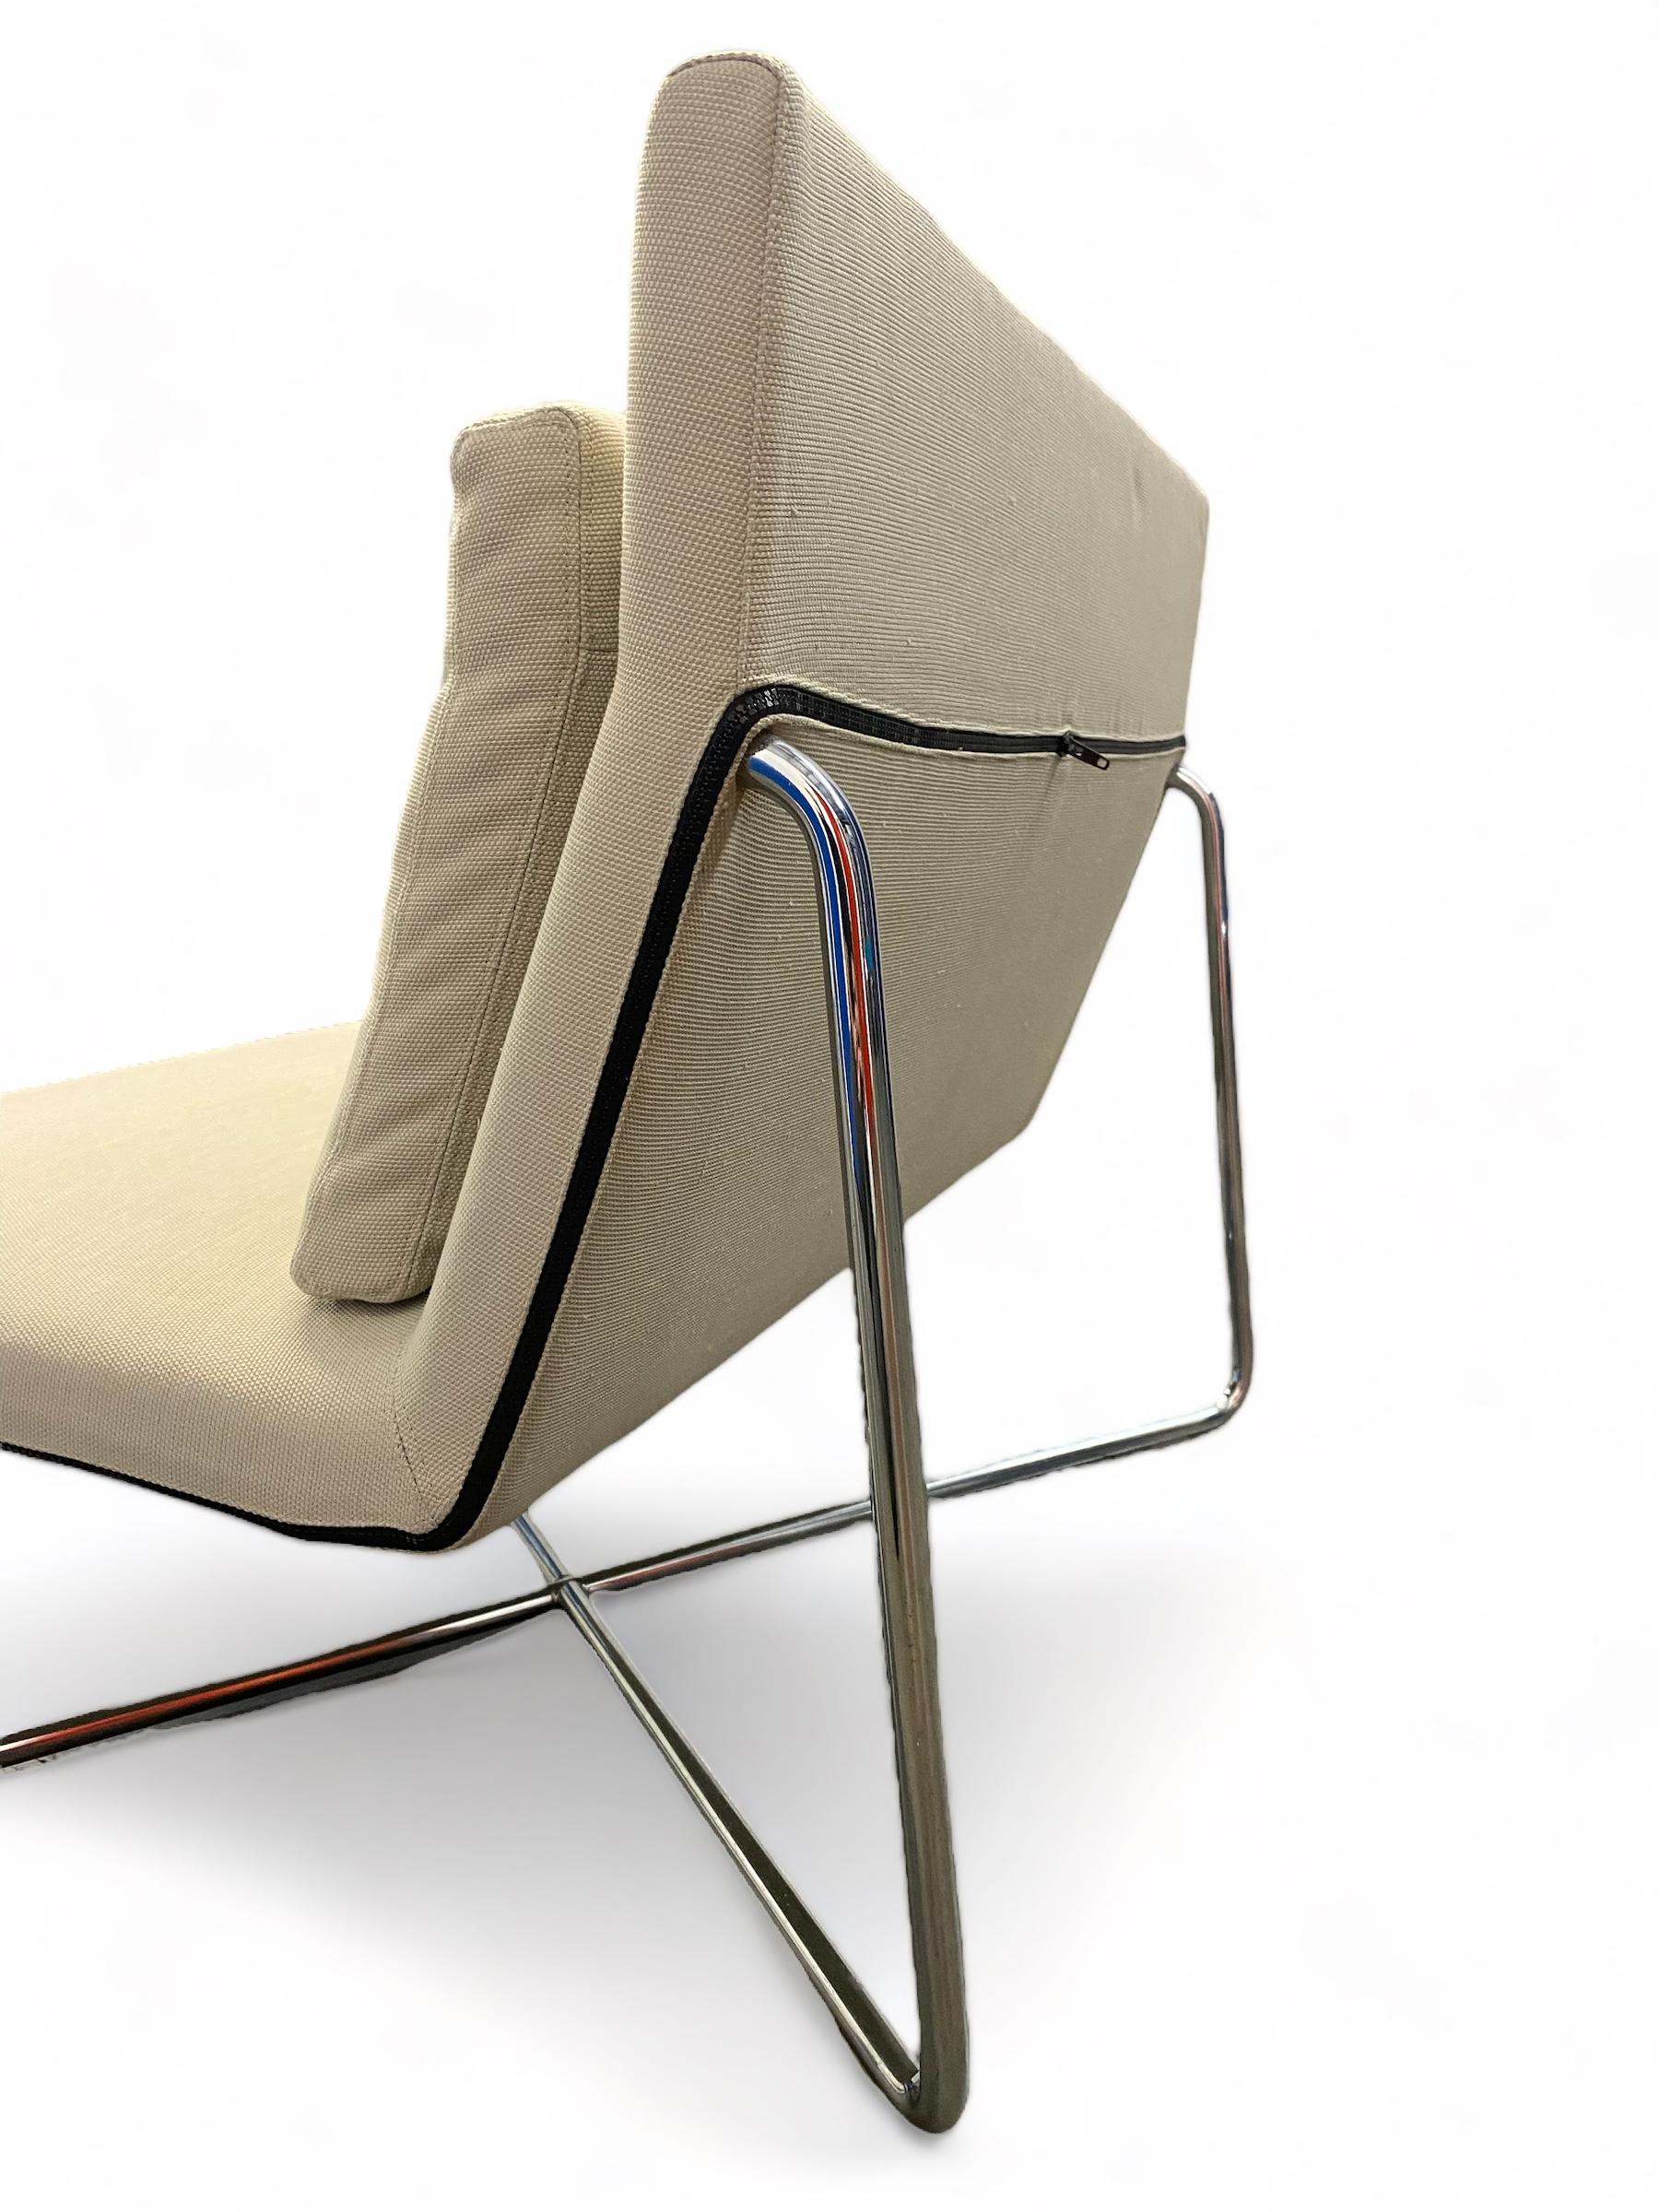 White Diller chair designed by Rodolfo Dordoni for Minotti, Italy. 1